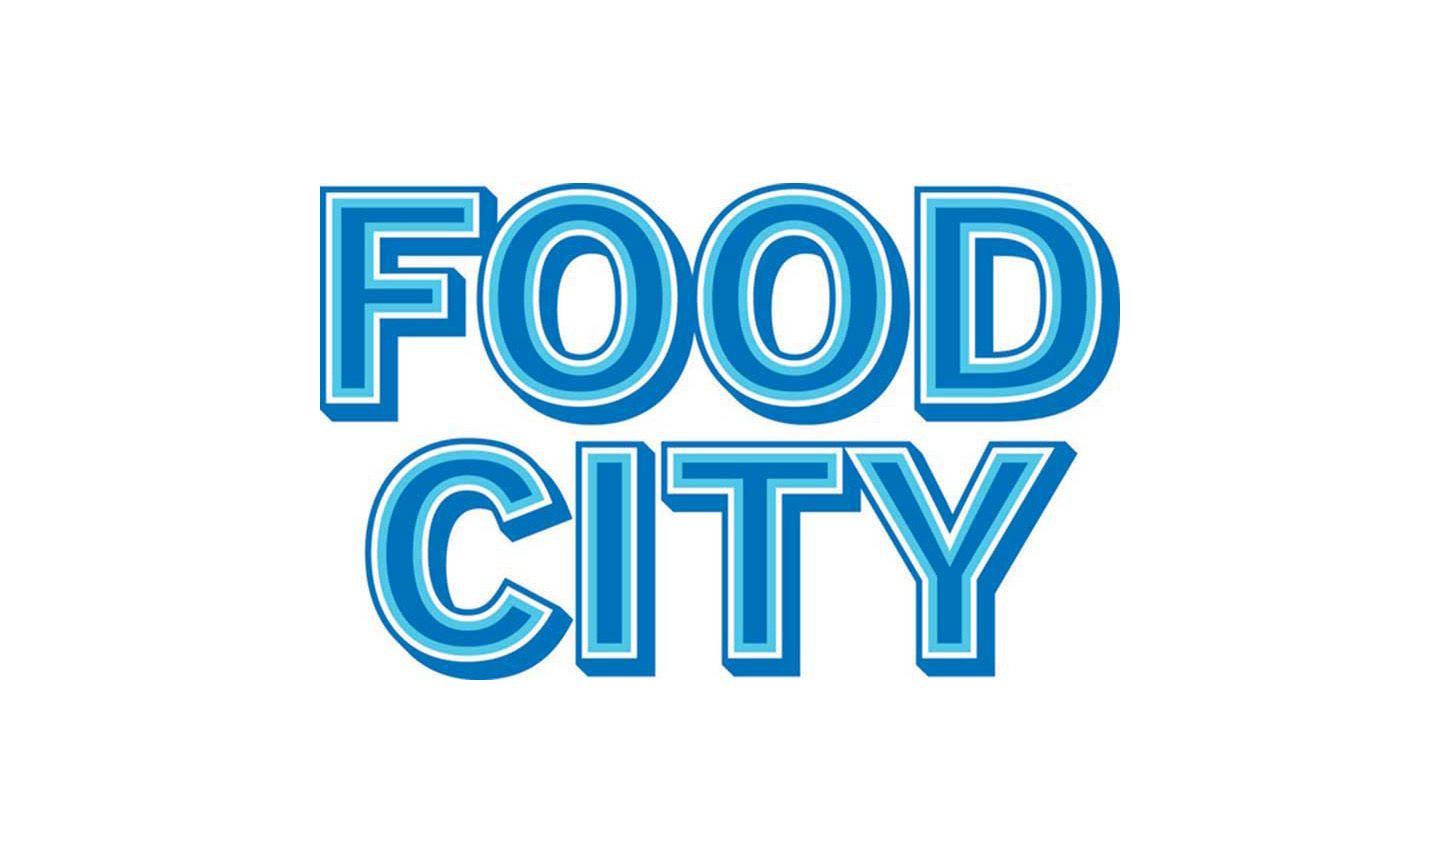 Arizona City Logo - Food City Will Celebrate New Look At Tucson, Arizona, Store Jan. 10